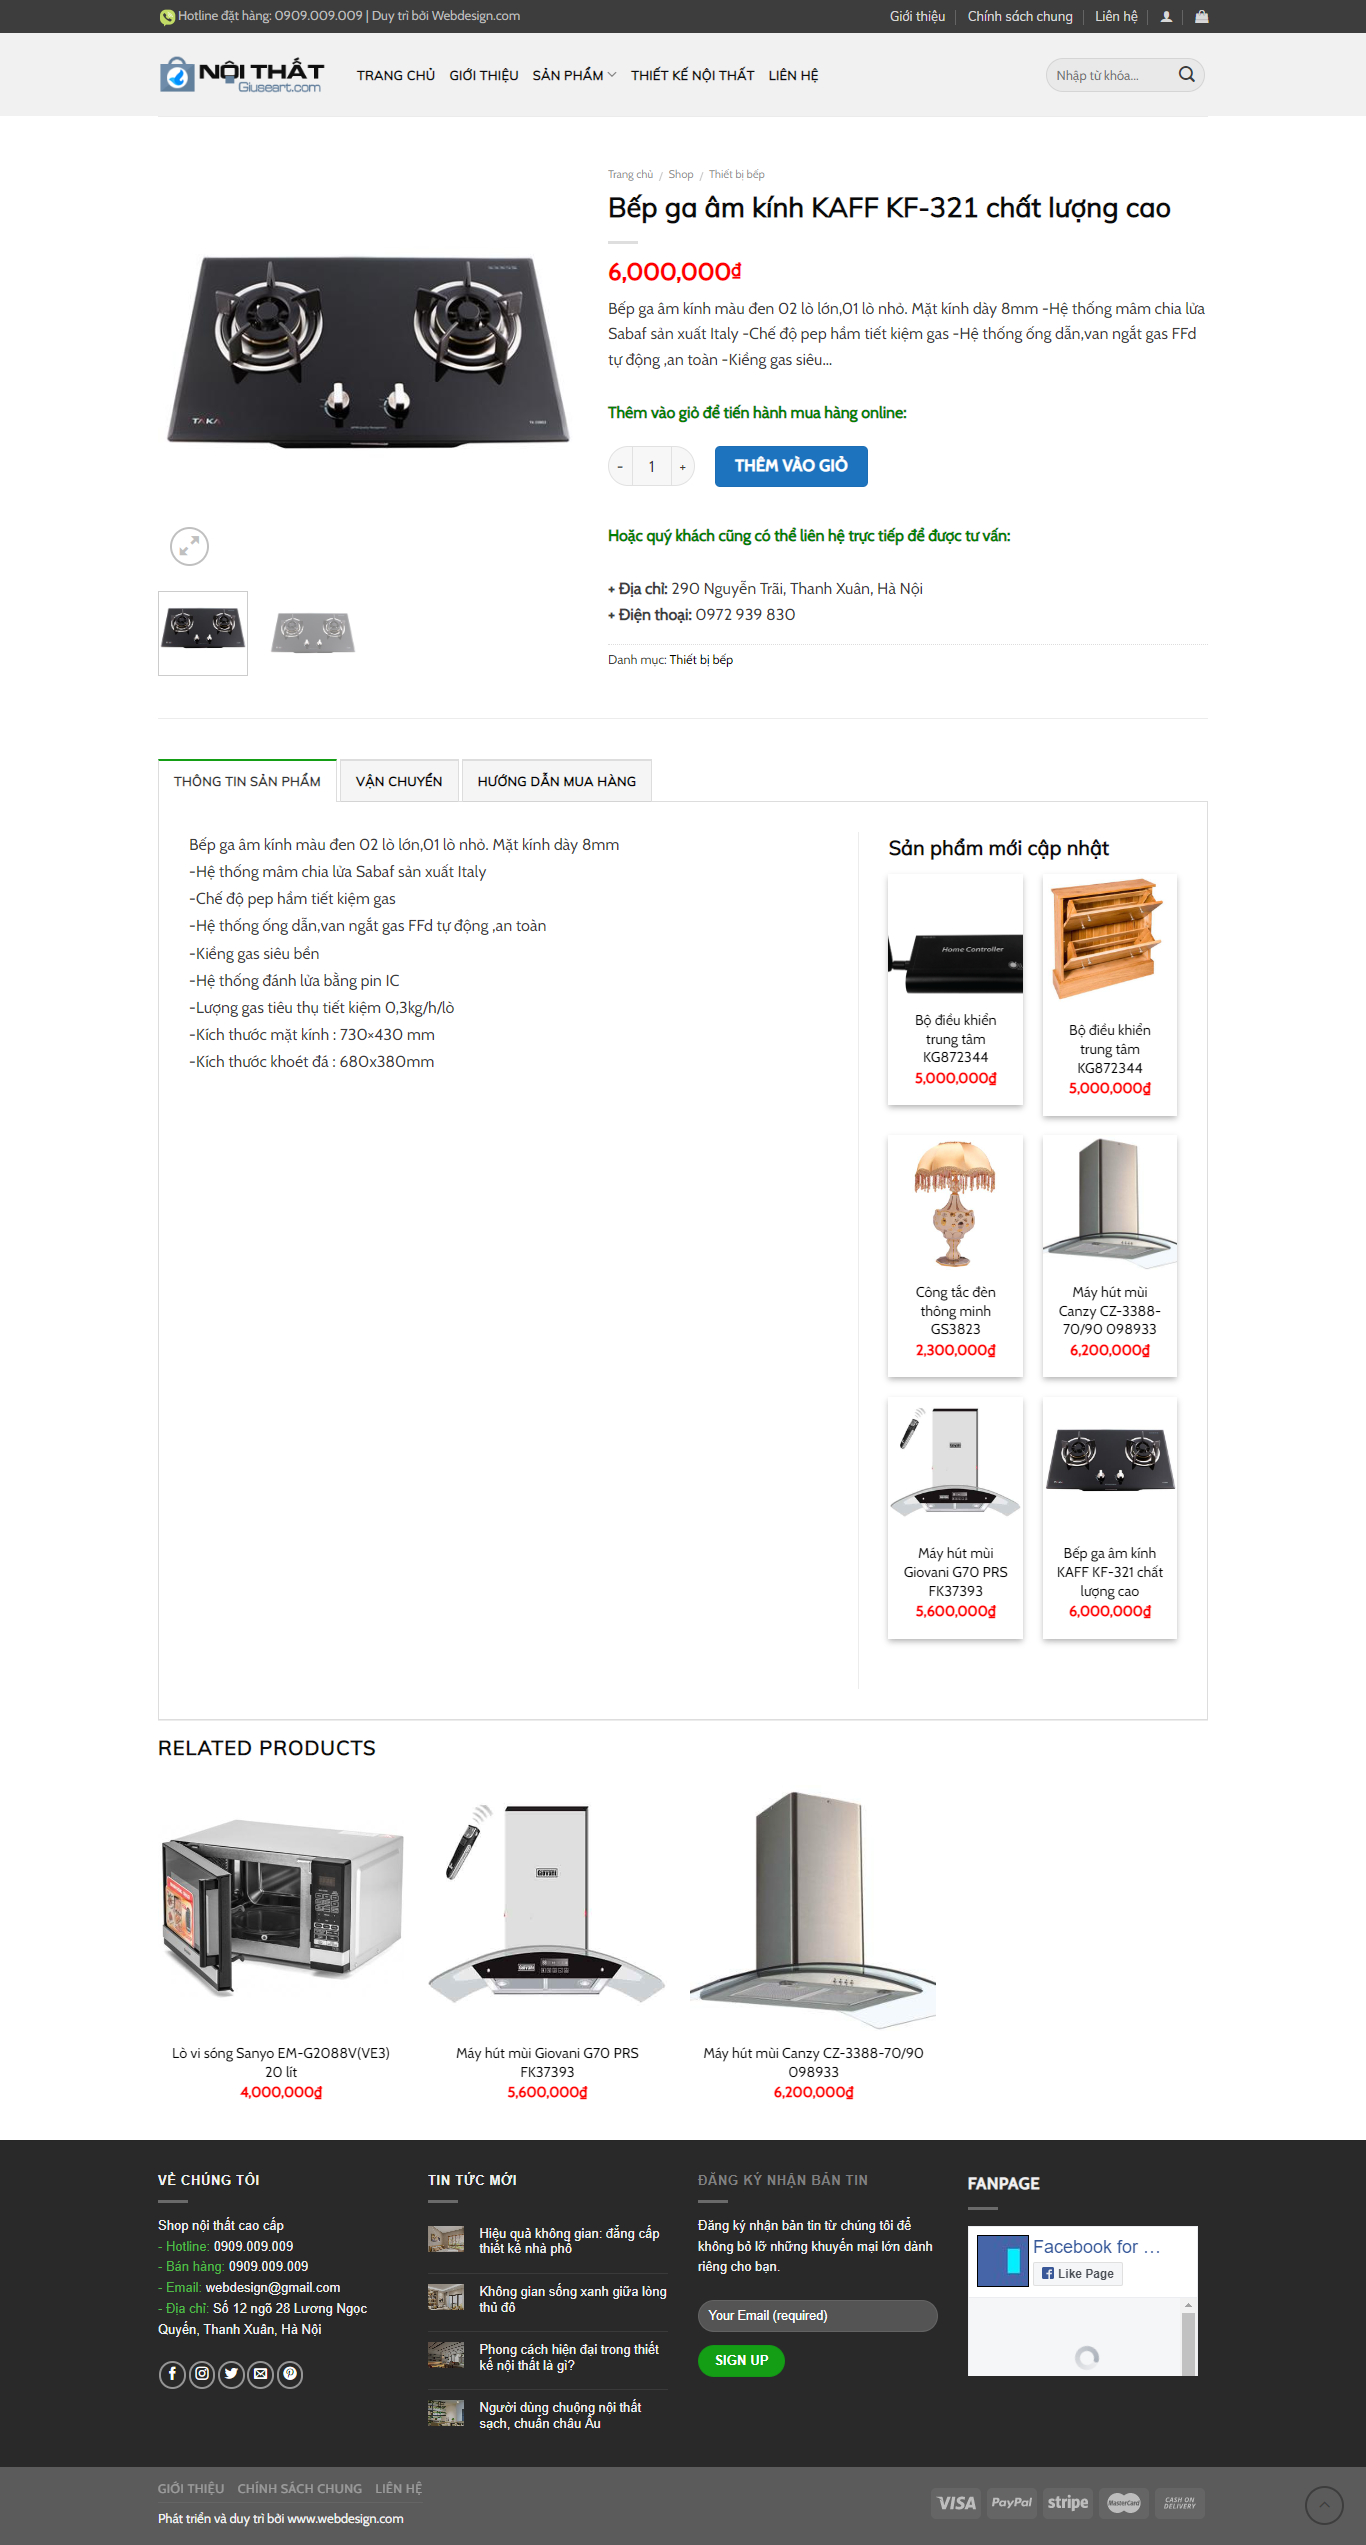 Shop furniture wordpress website free download